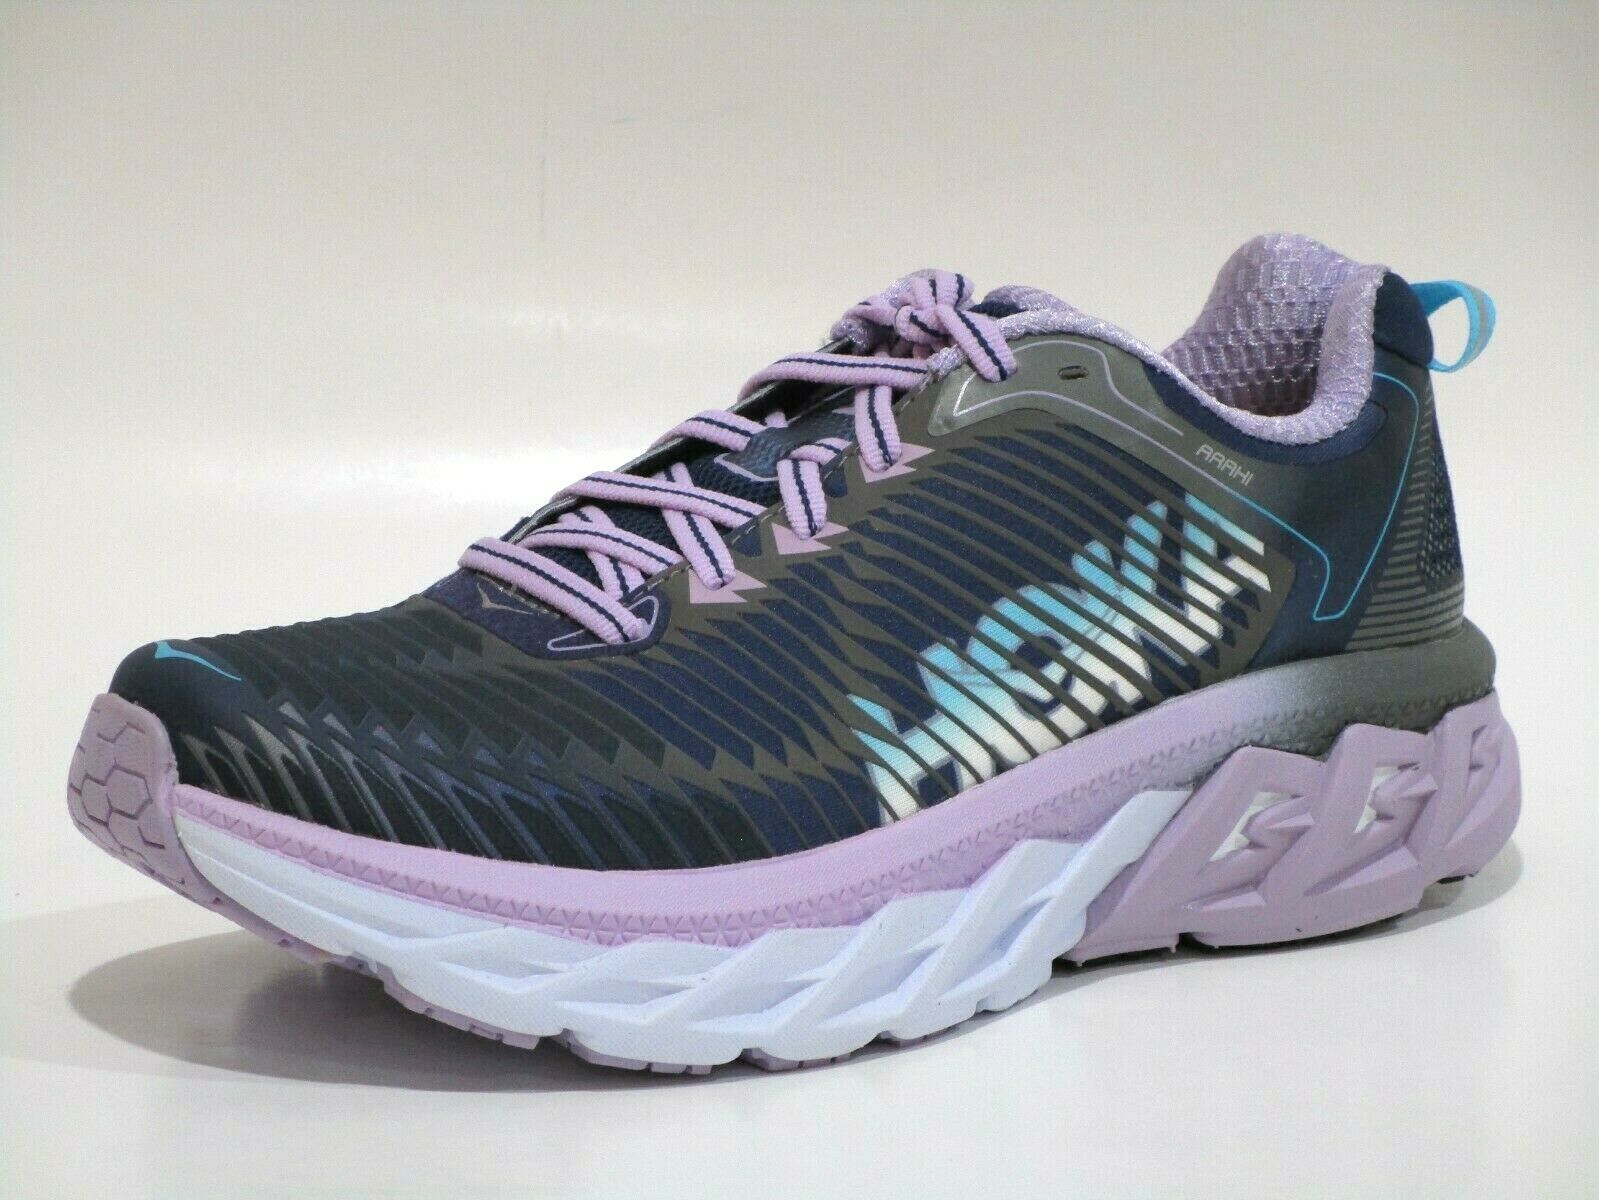 HOKA ONE ONE Women's Arahi Road Running Shoes, Brand New, Size 6 (medium) US